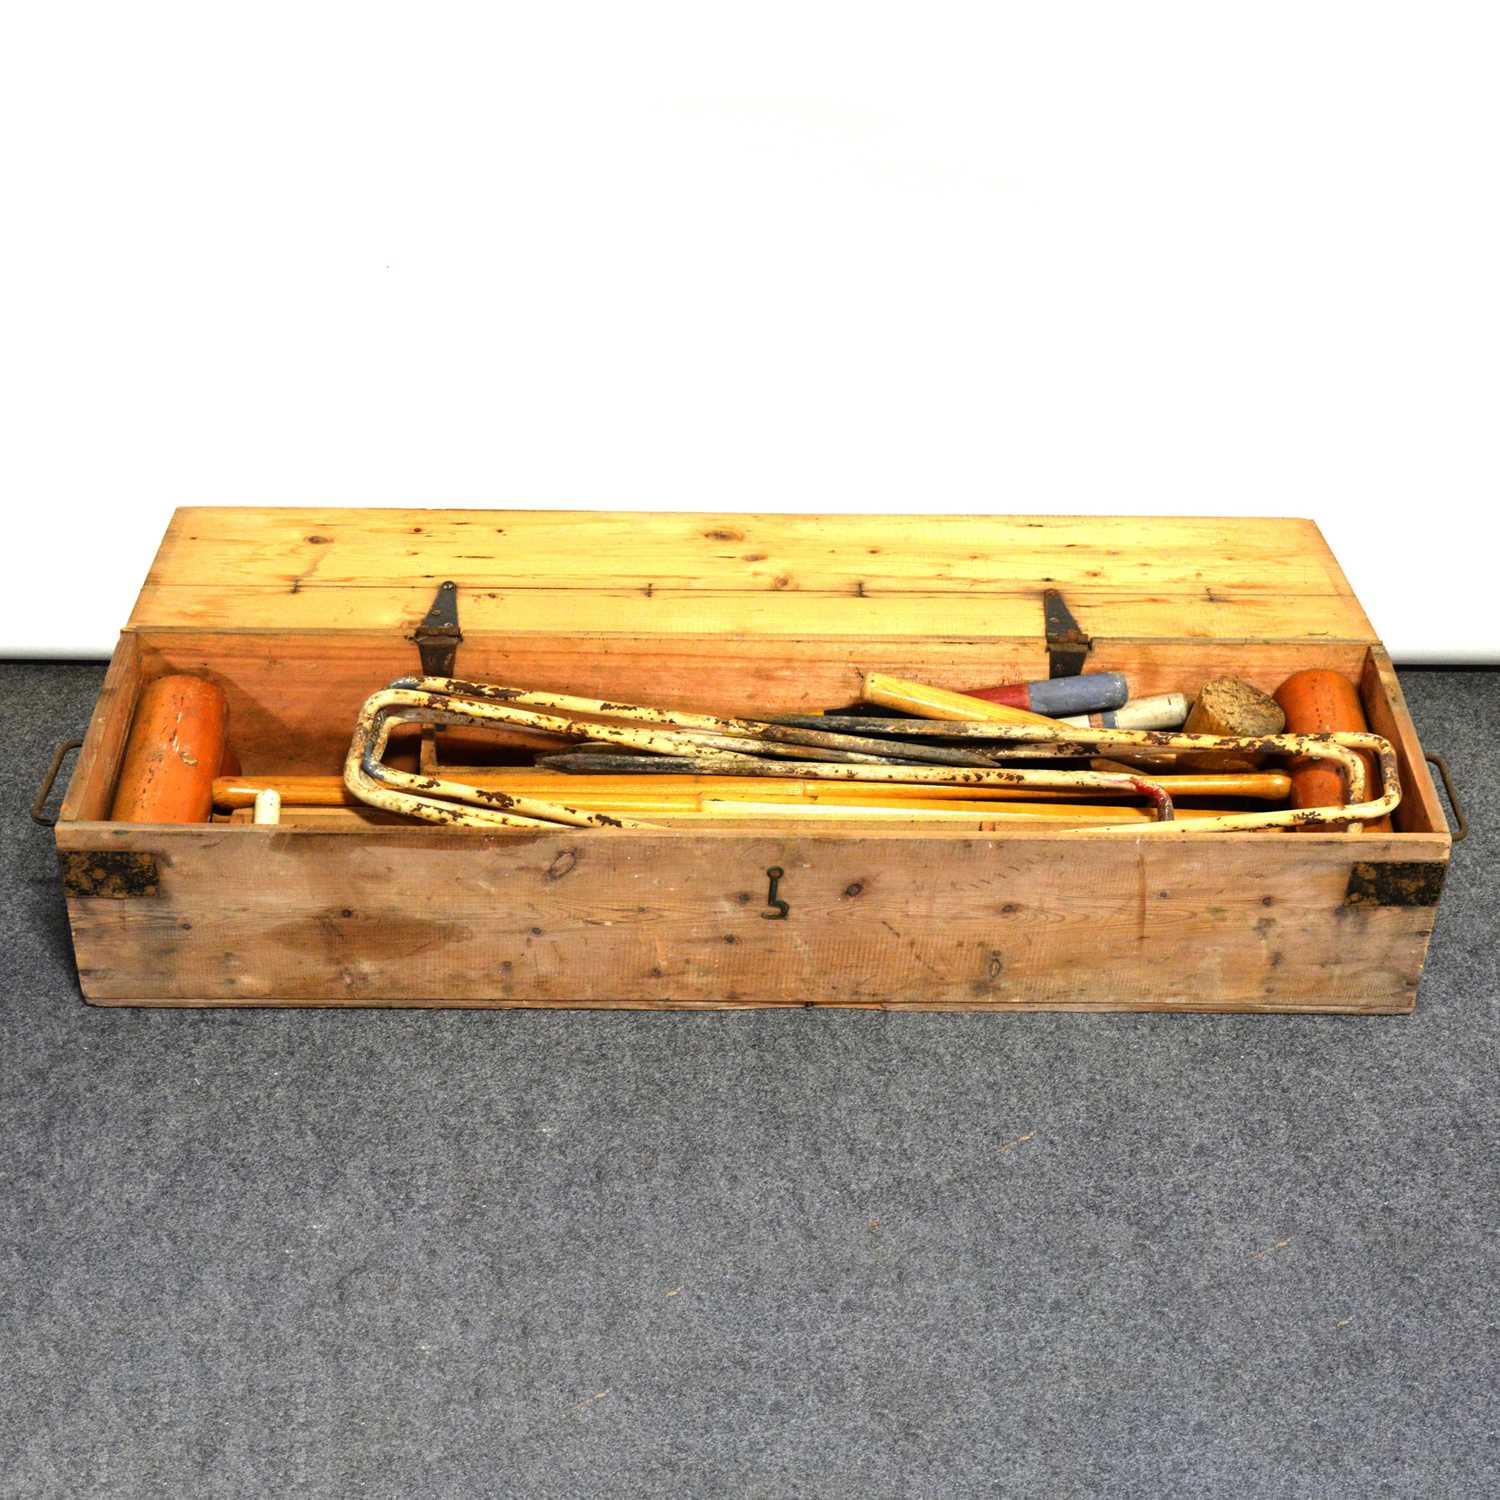 Lot 494 - Spalding 3 croquet set, wooden box.